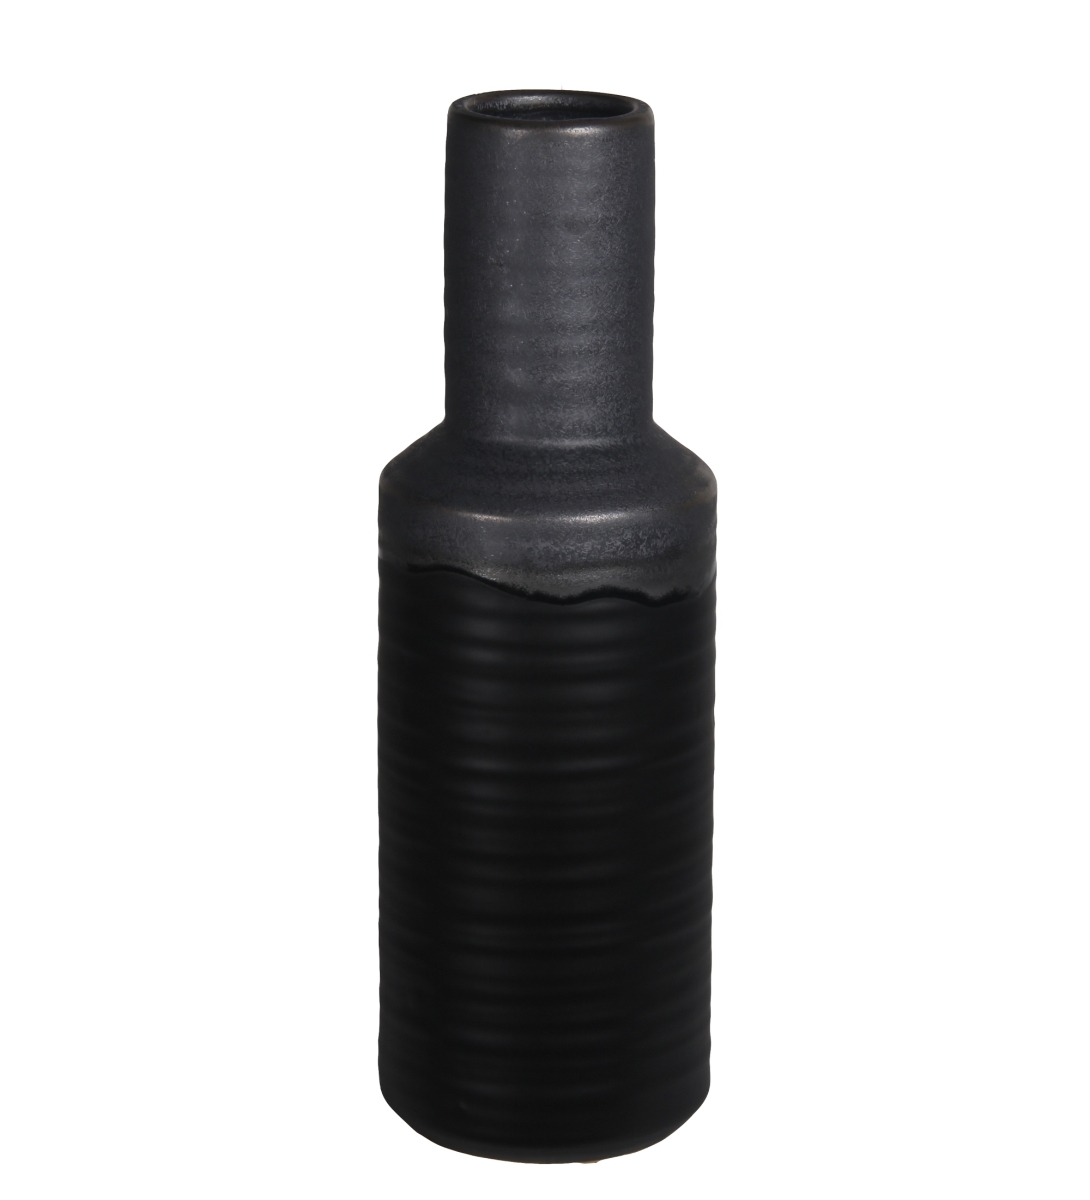 78214 6 X 6 X 16 In. Contemporary Ceramic Vase, Black & Grey - Large